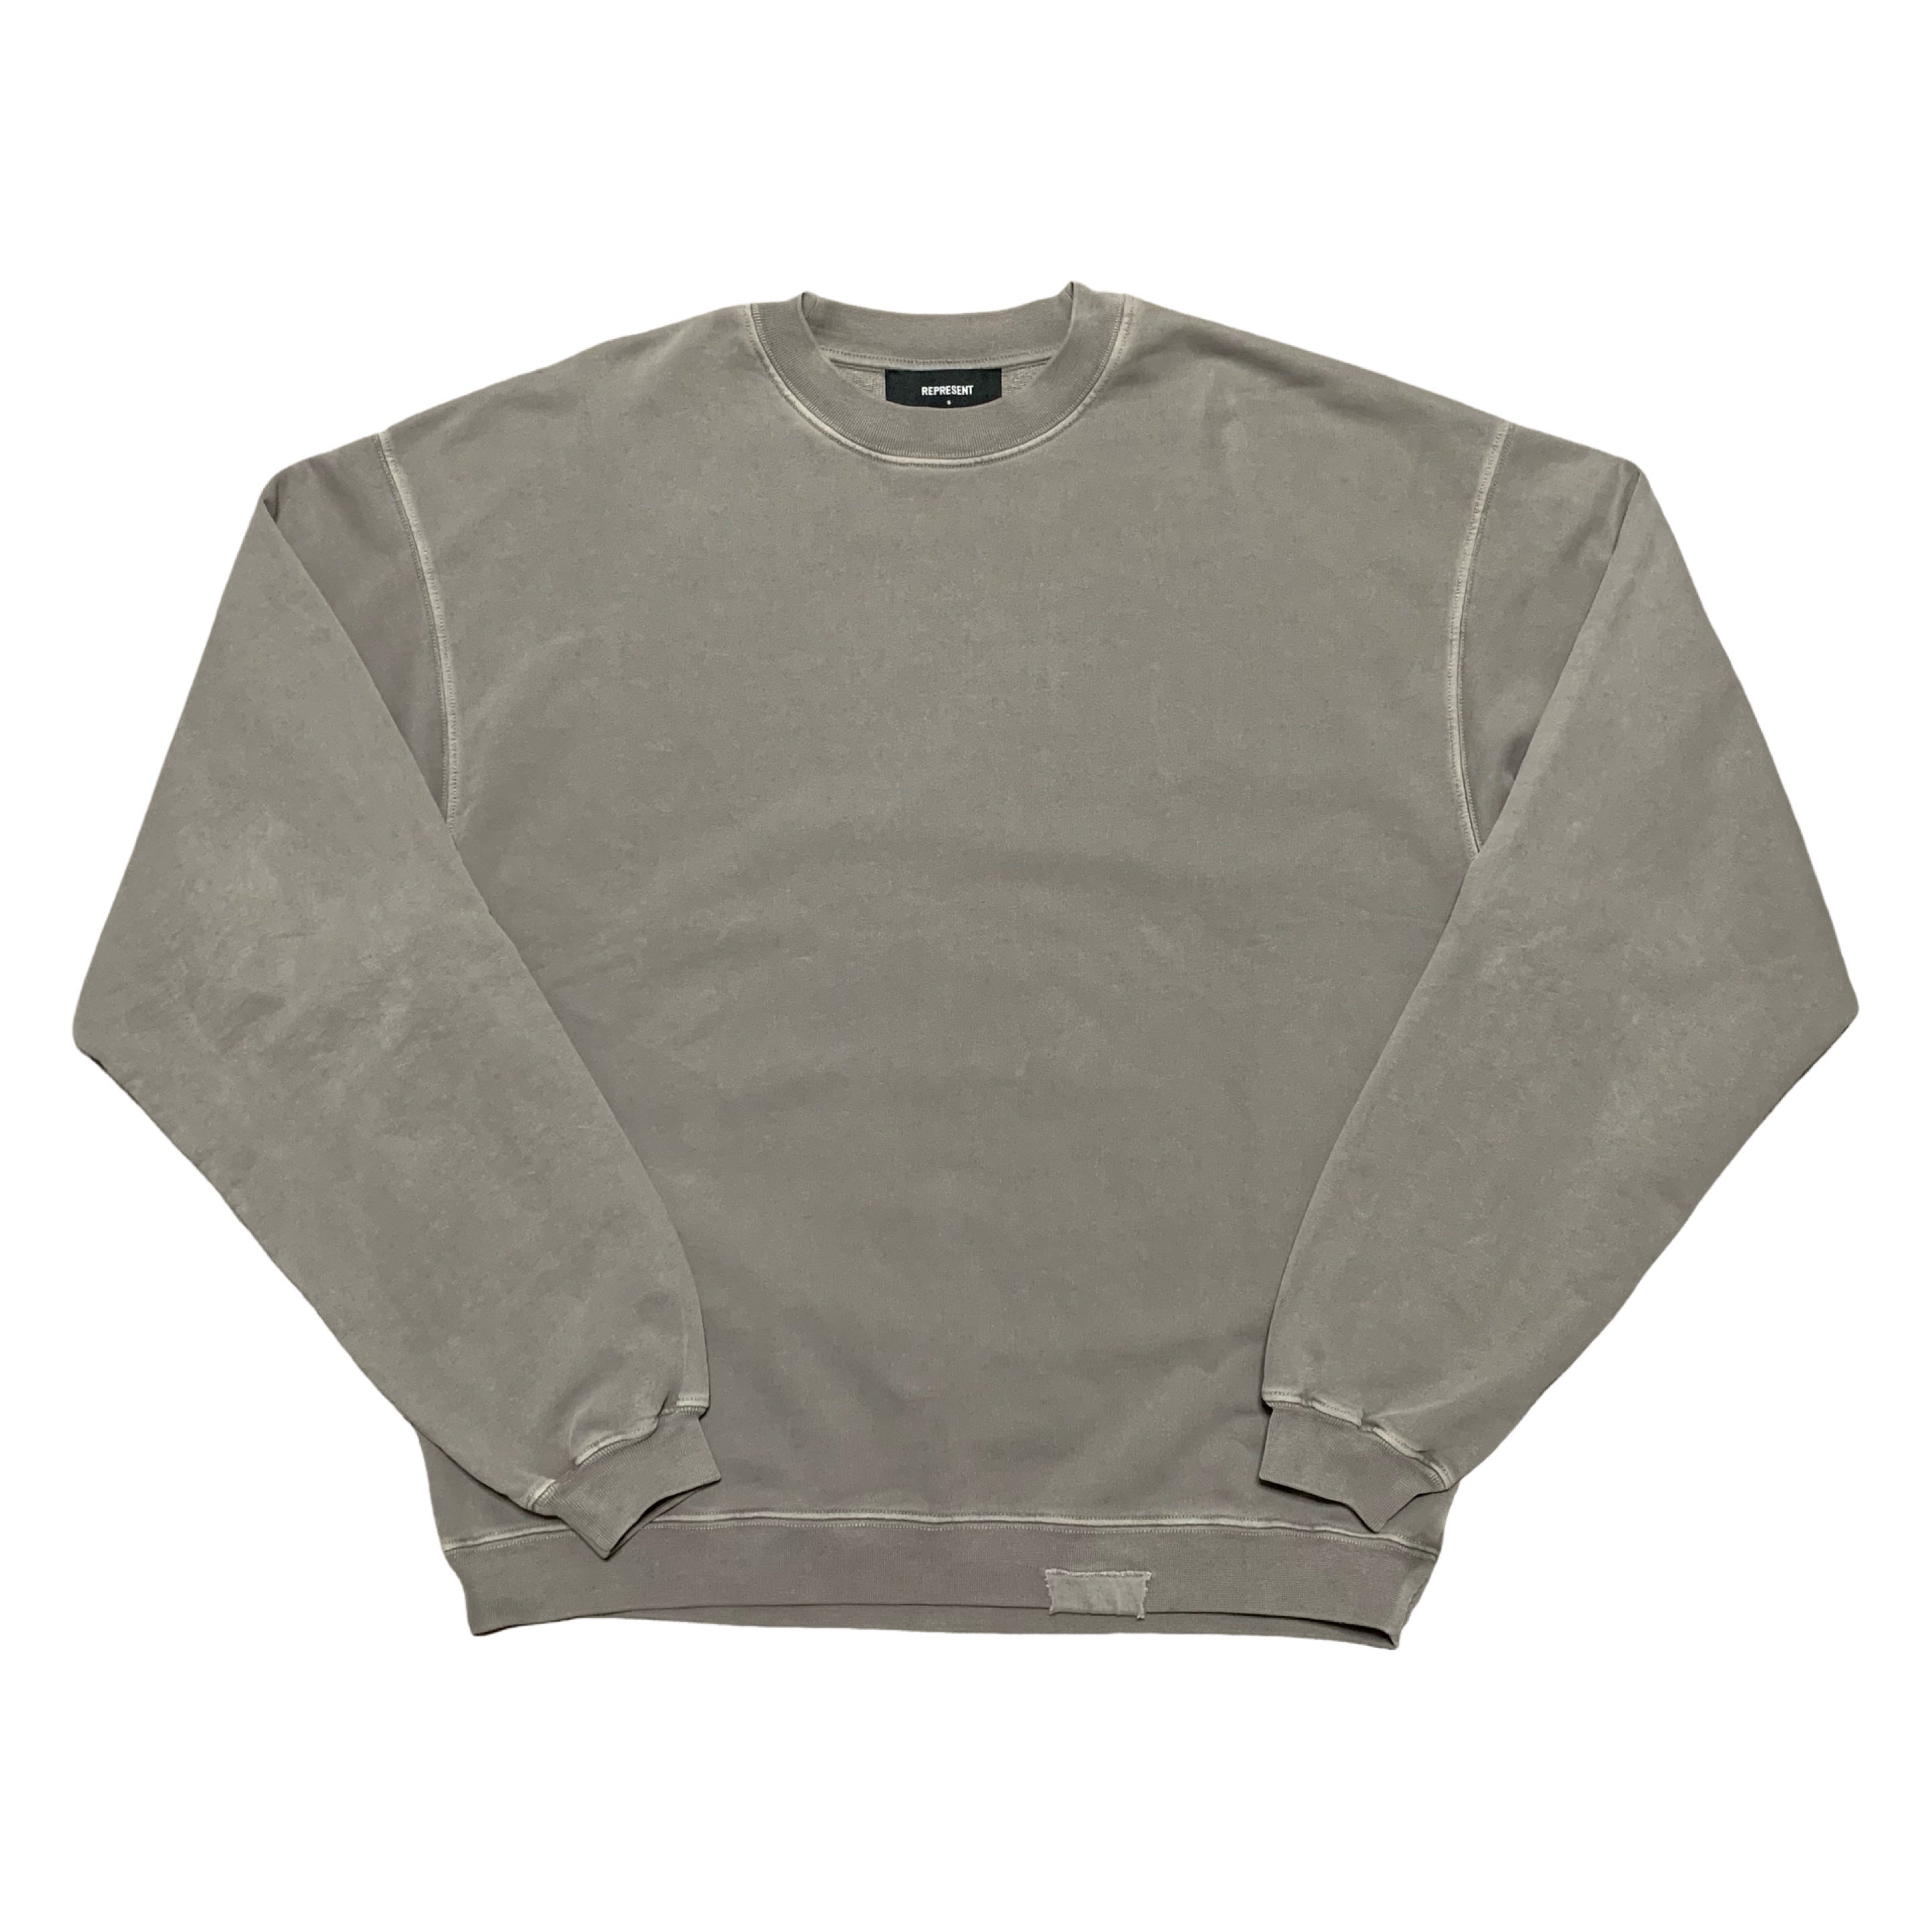 Represent Small Initial Ultimate Grey Sweater Sweatshirt